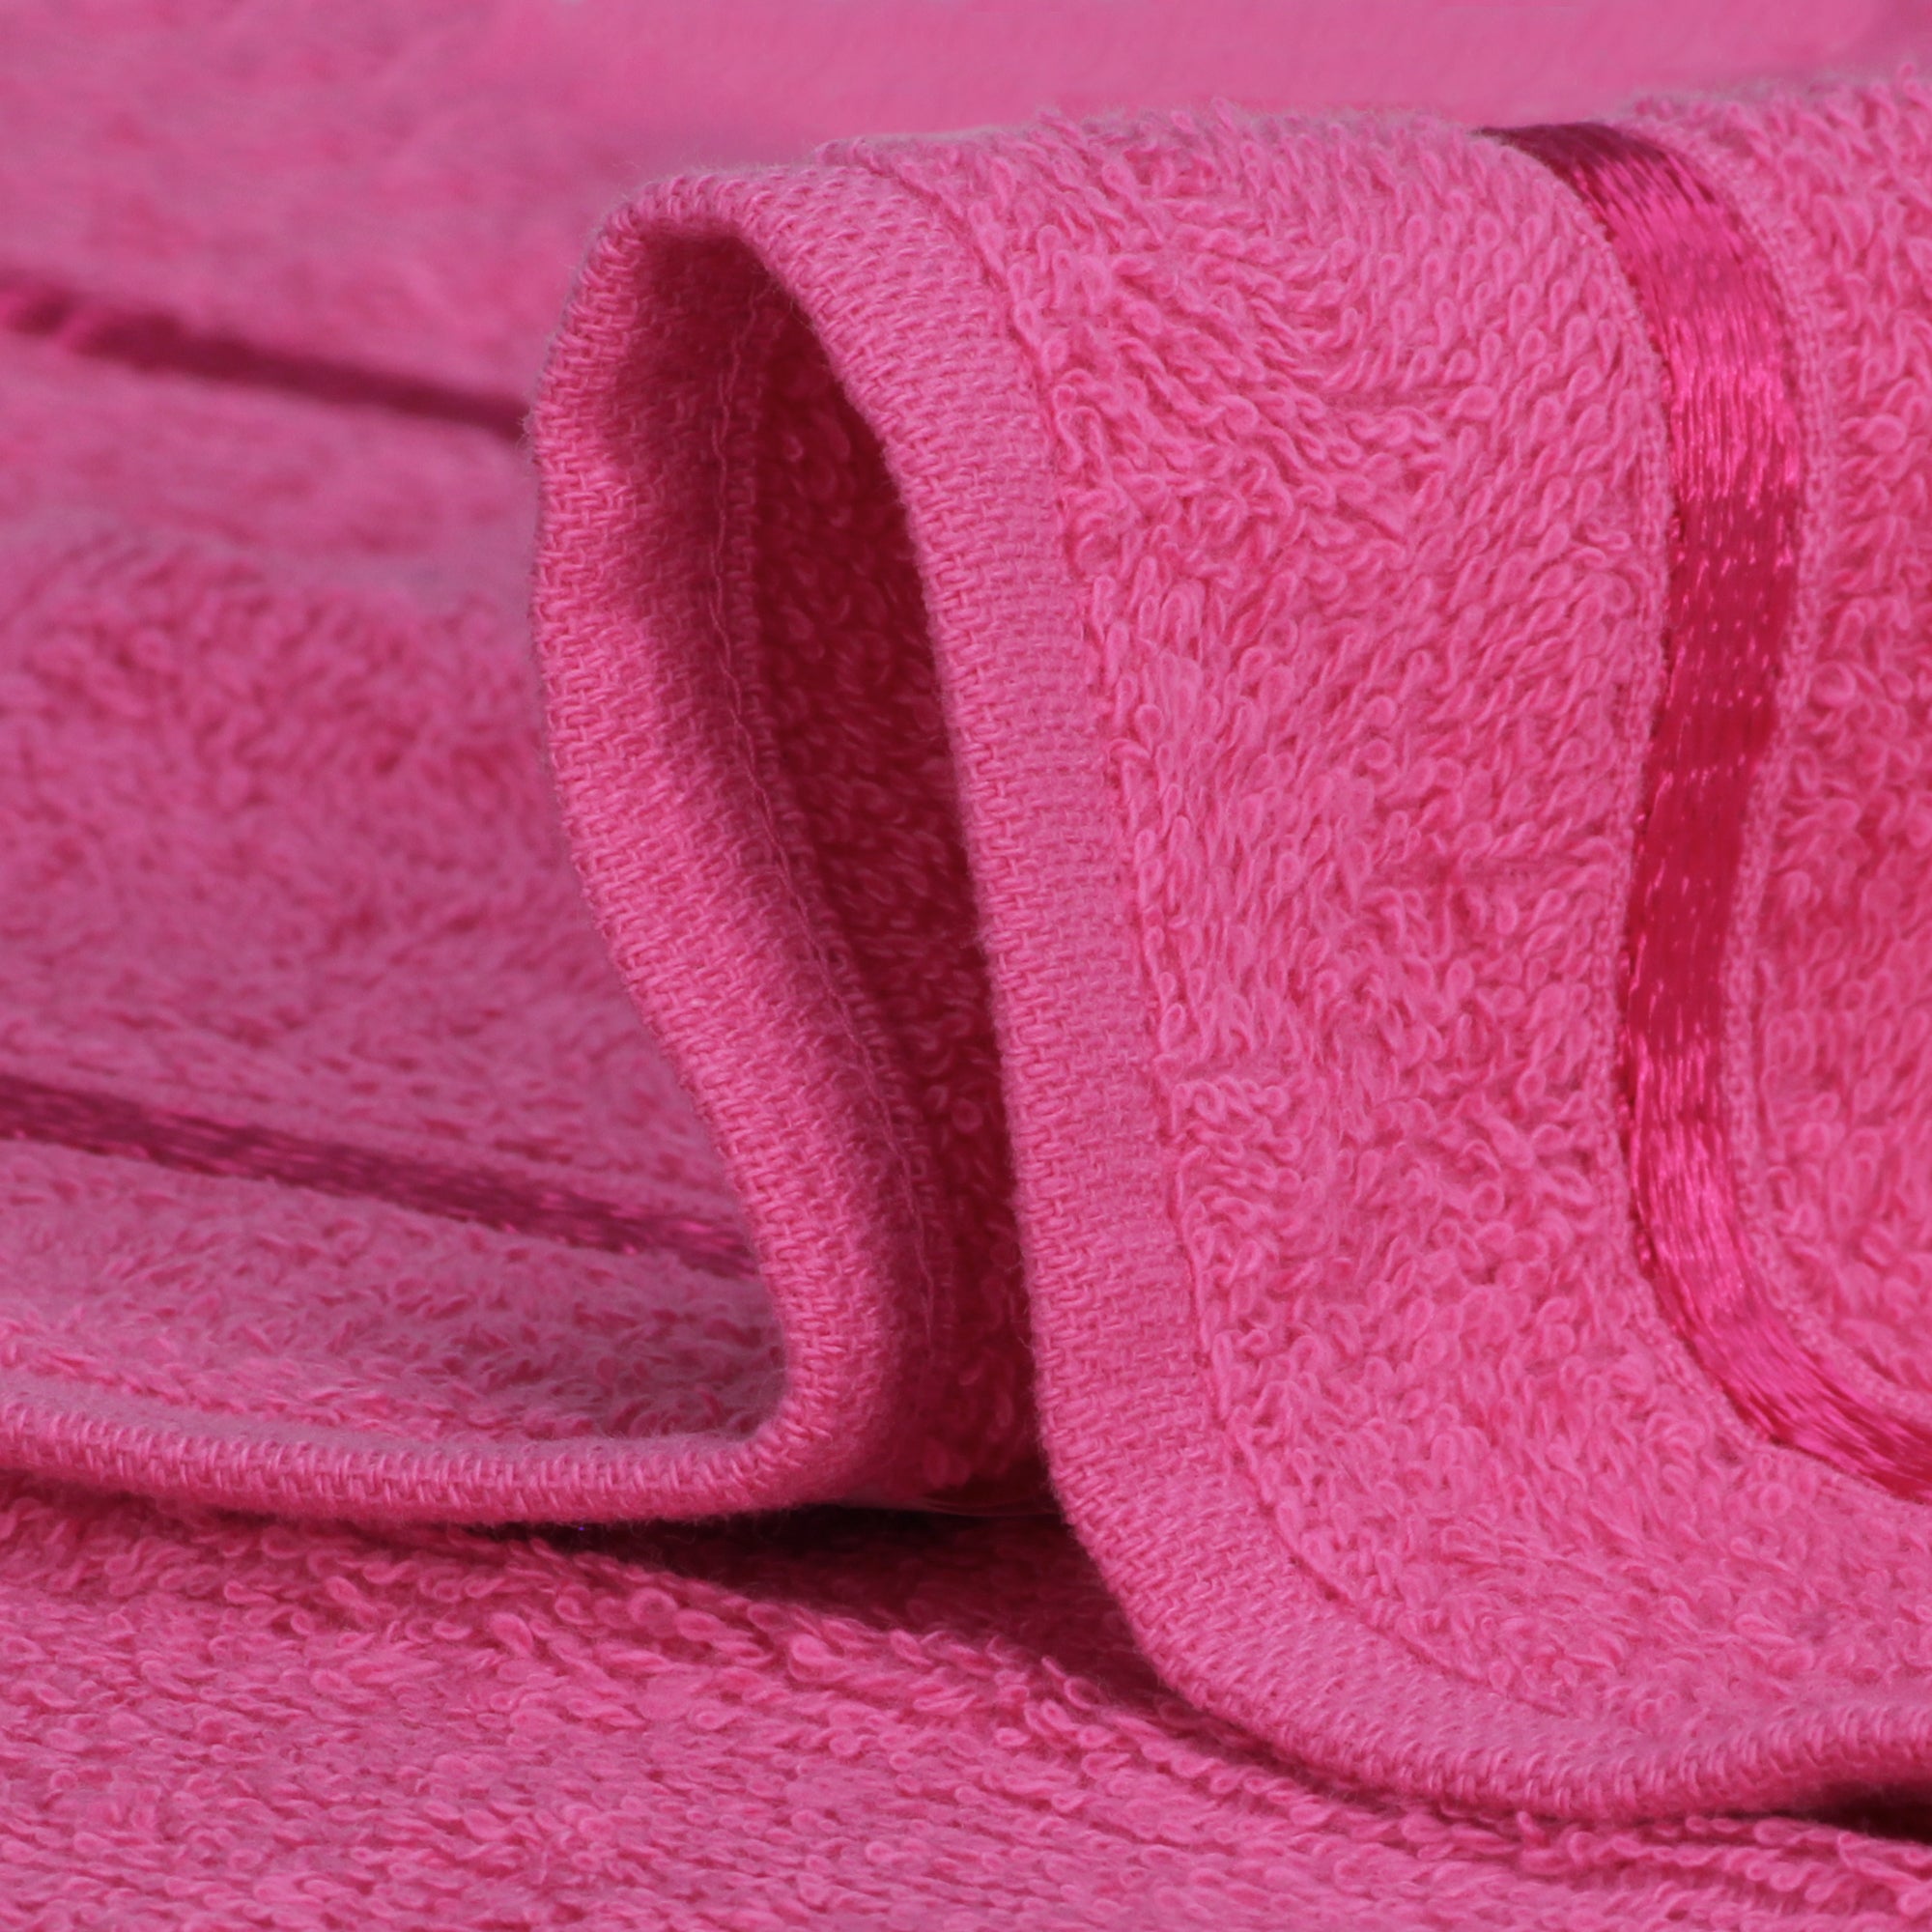 Story@Home 3 Units 100% Cotton Bath Towels - Pink